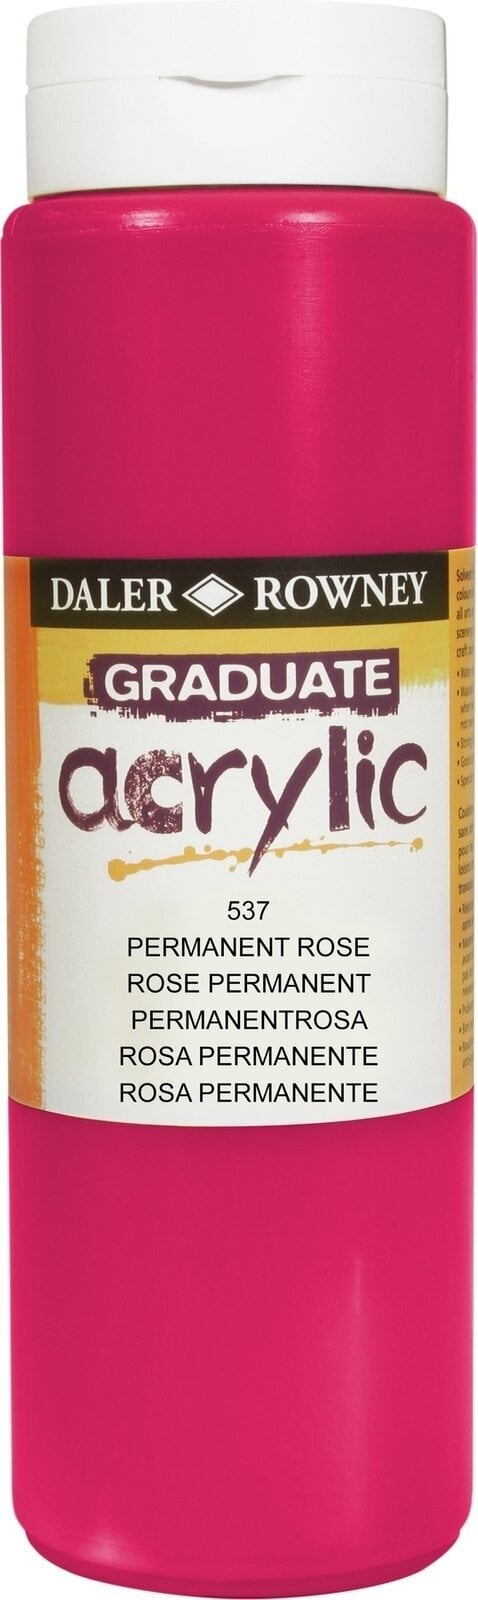 Akrylmaling Daler Rowney Graduate Akrylmaling Permant Rose 500 ml 1 stk.